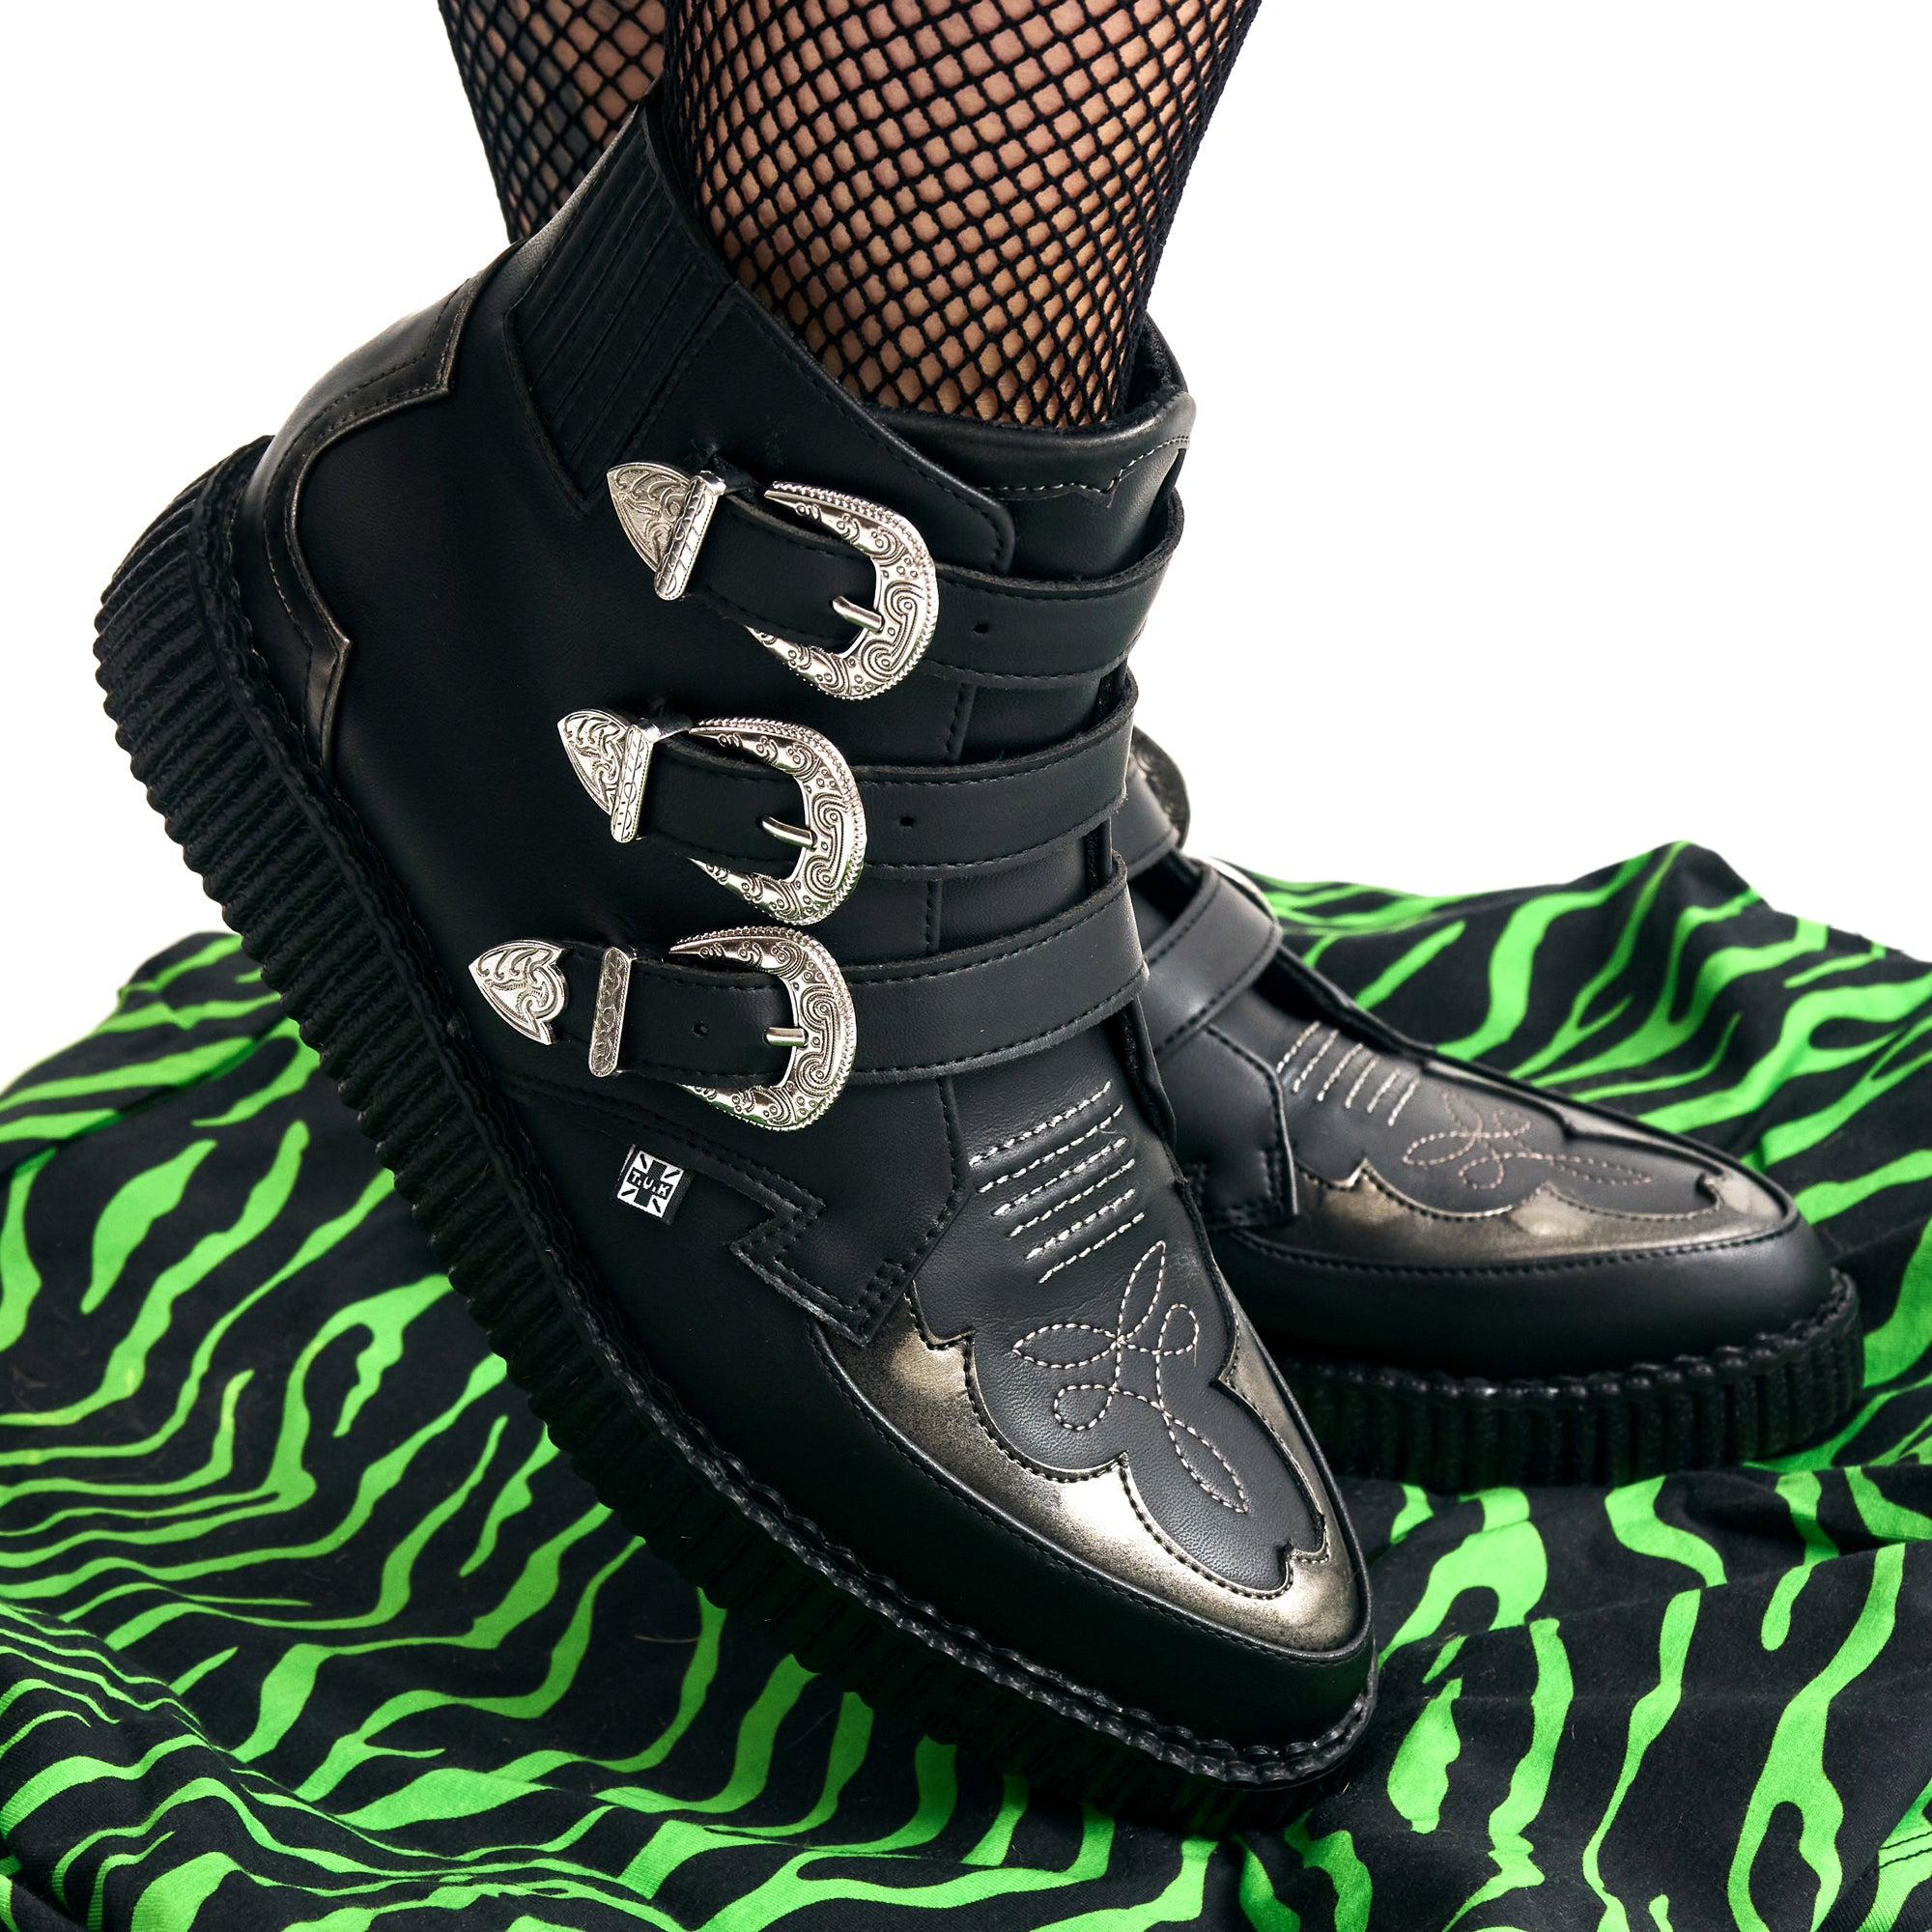 T.U.K. - Pointed Creeper Sandal 3 Buckle Black - Girl Shoes